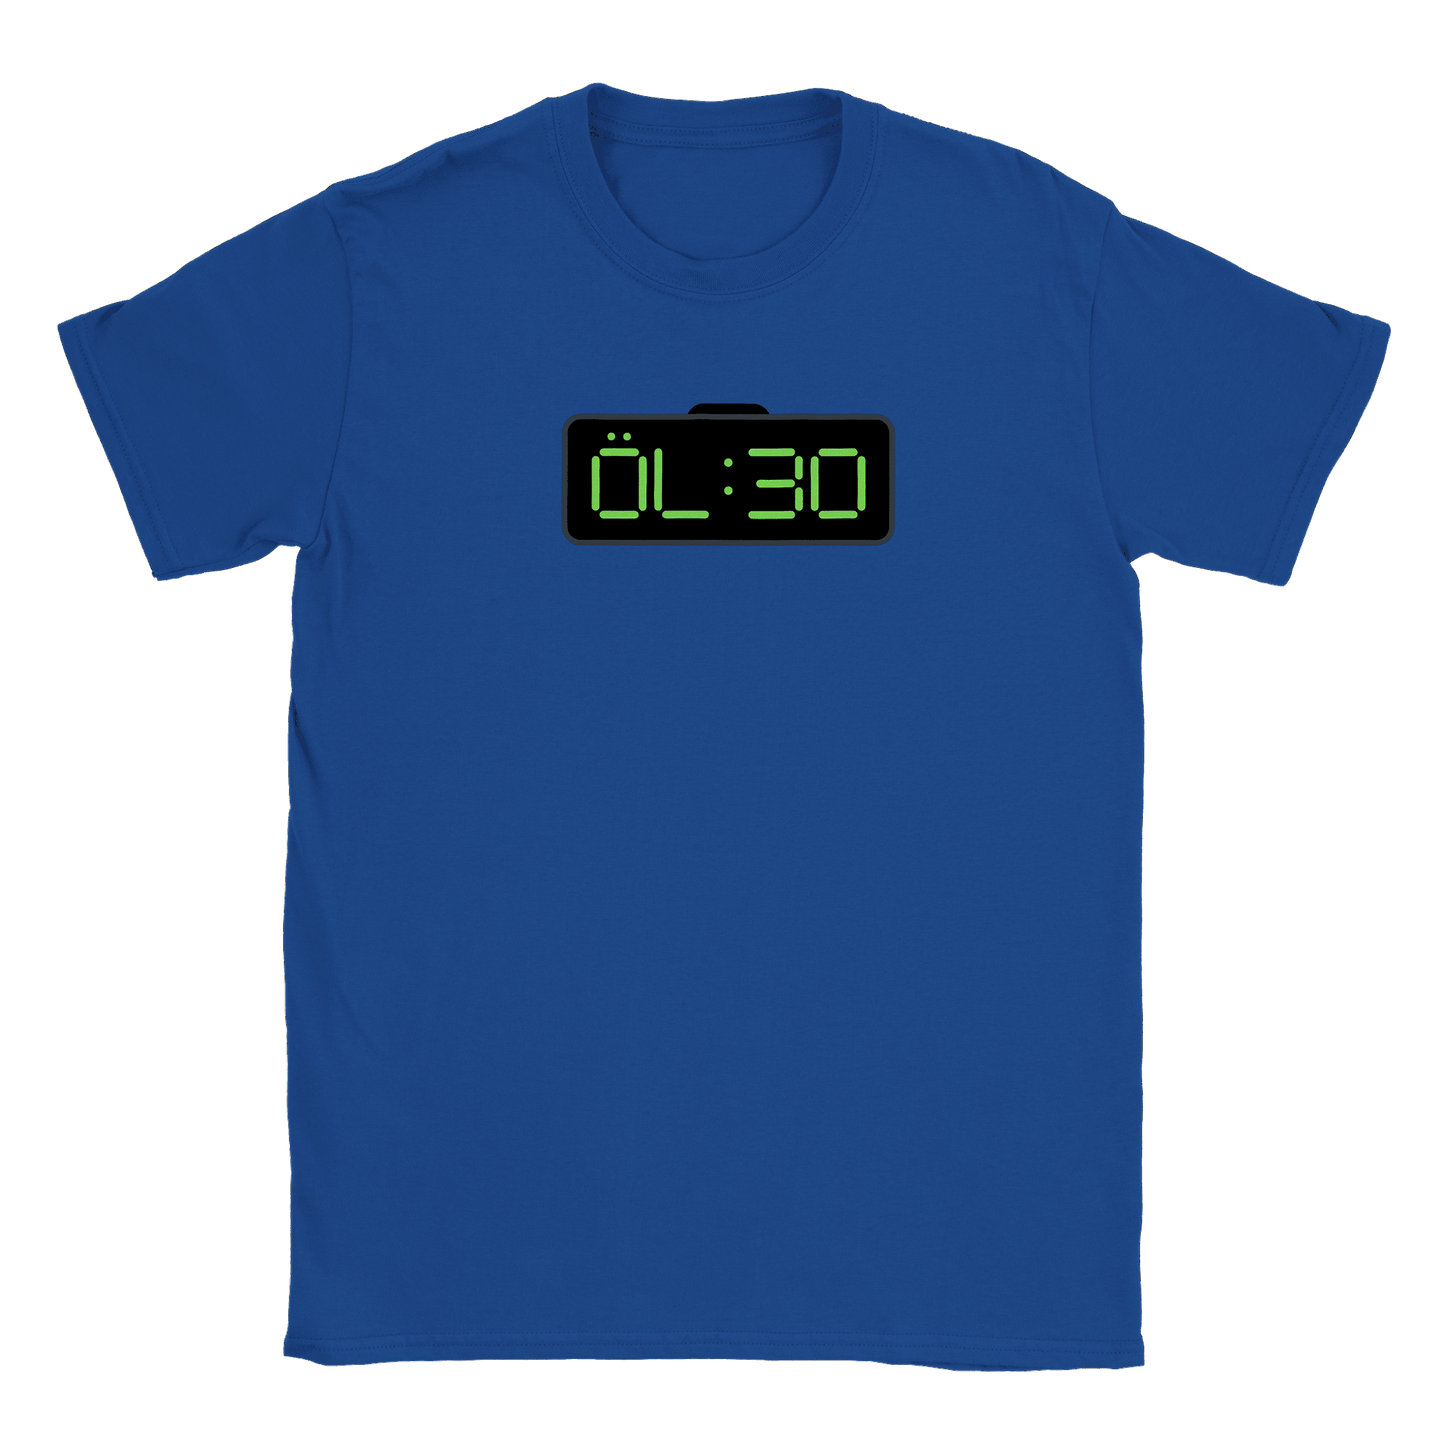 ÖL 30 - T-shirt Royal